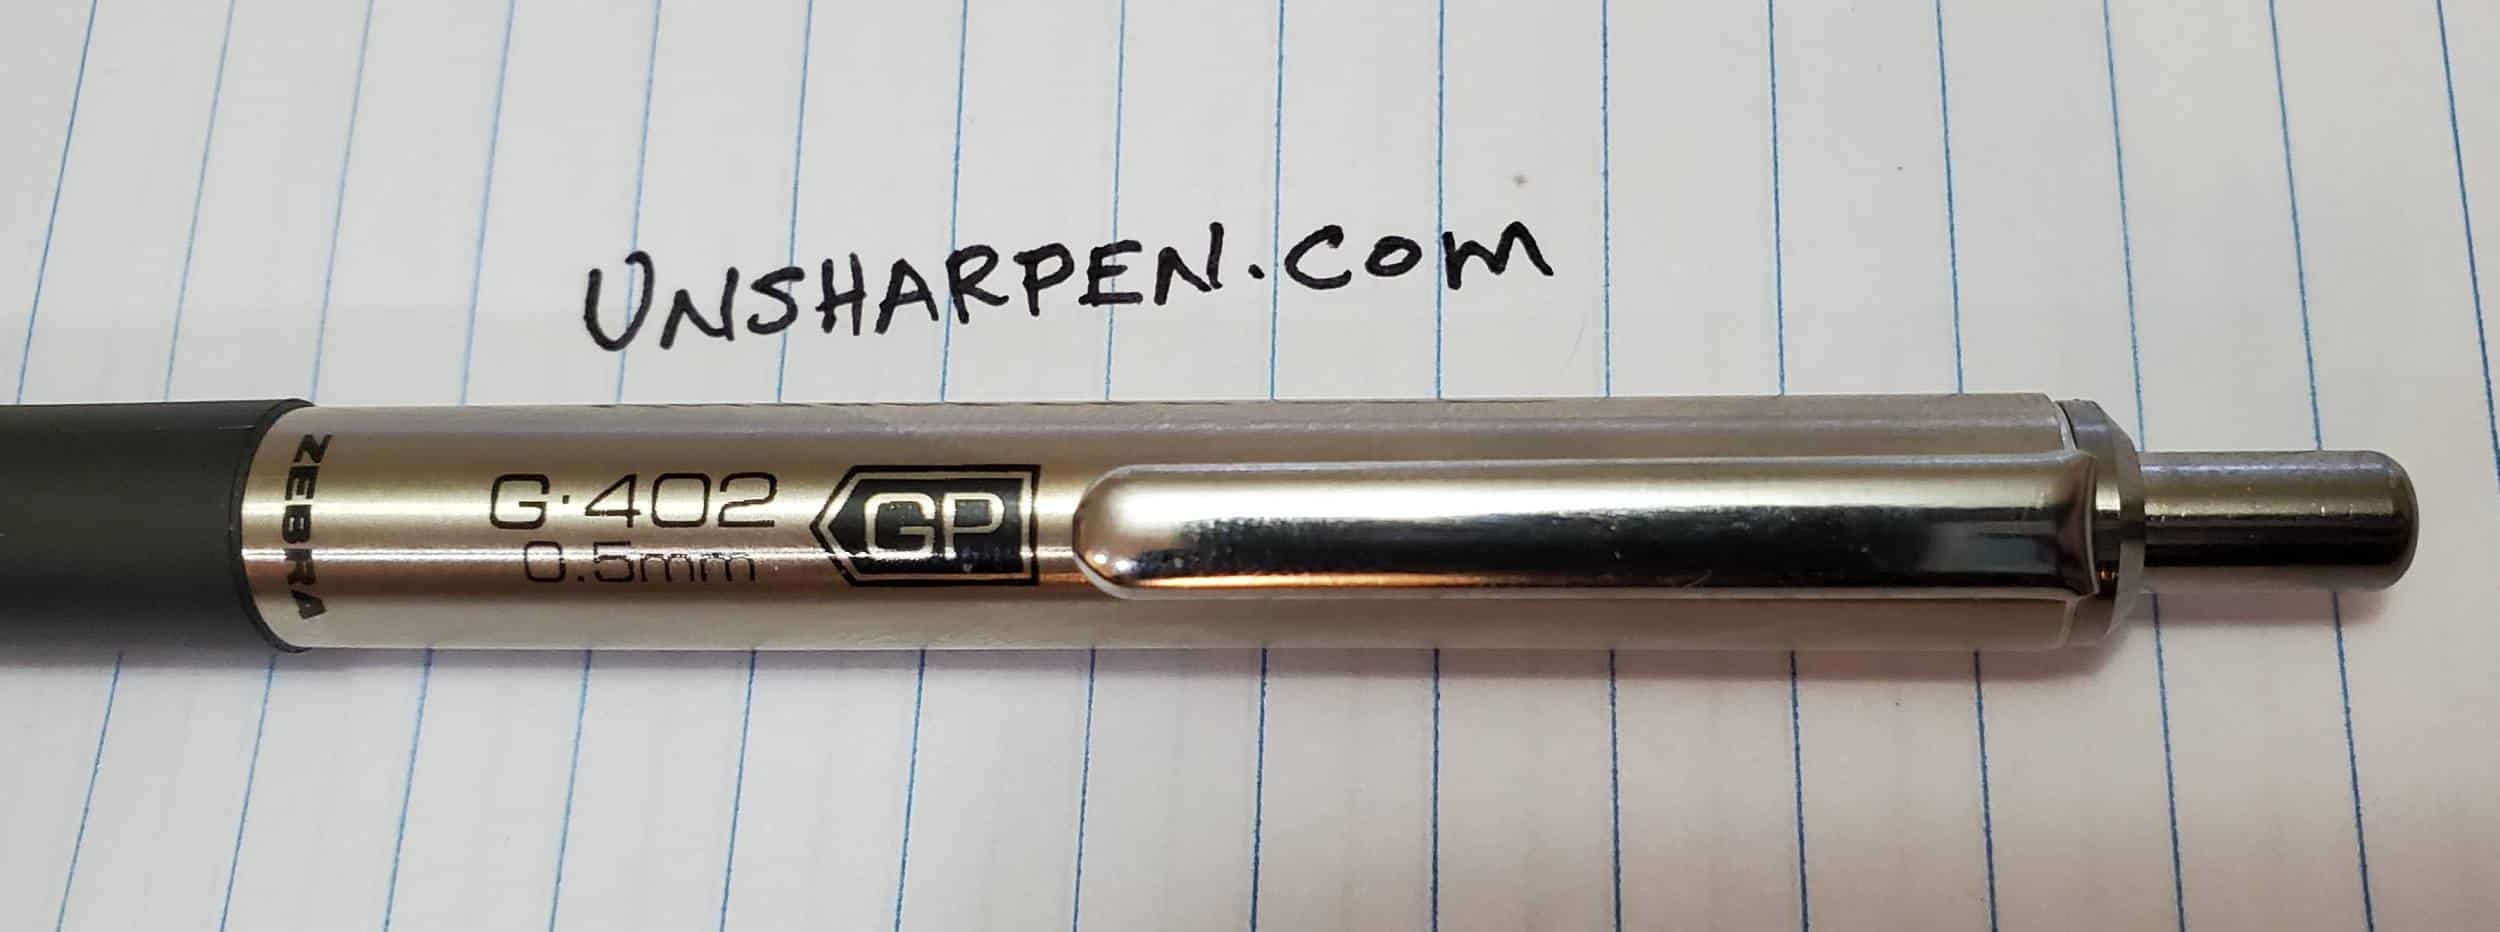 Zebra G402 4 Series Gel Pen, Retractable, Black Ink, Fine Point, 0.5 mm